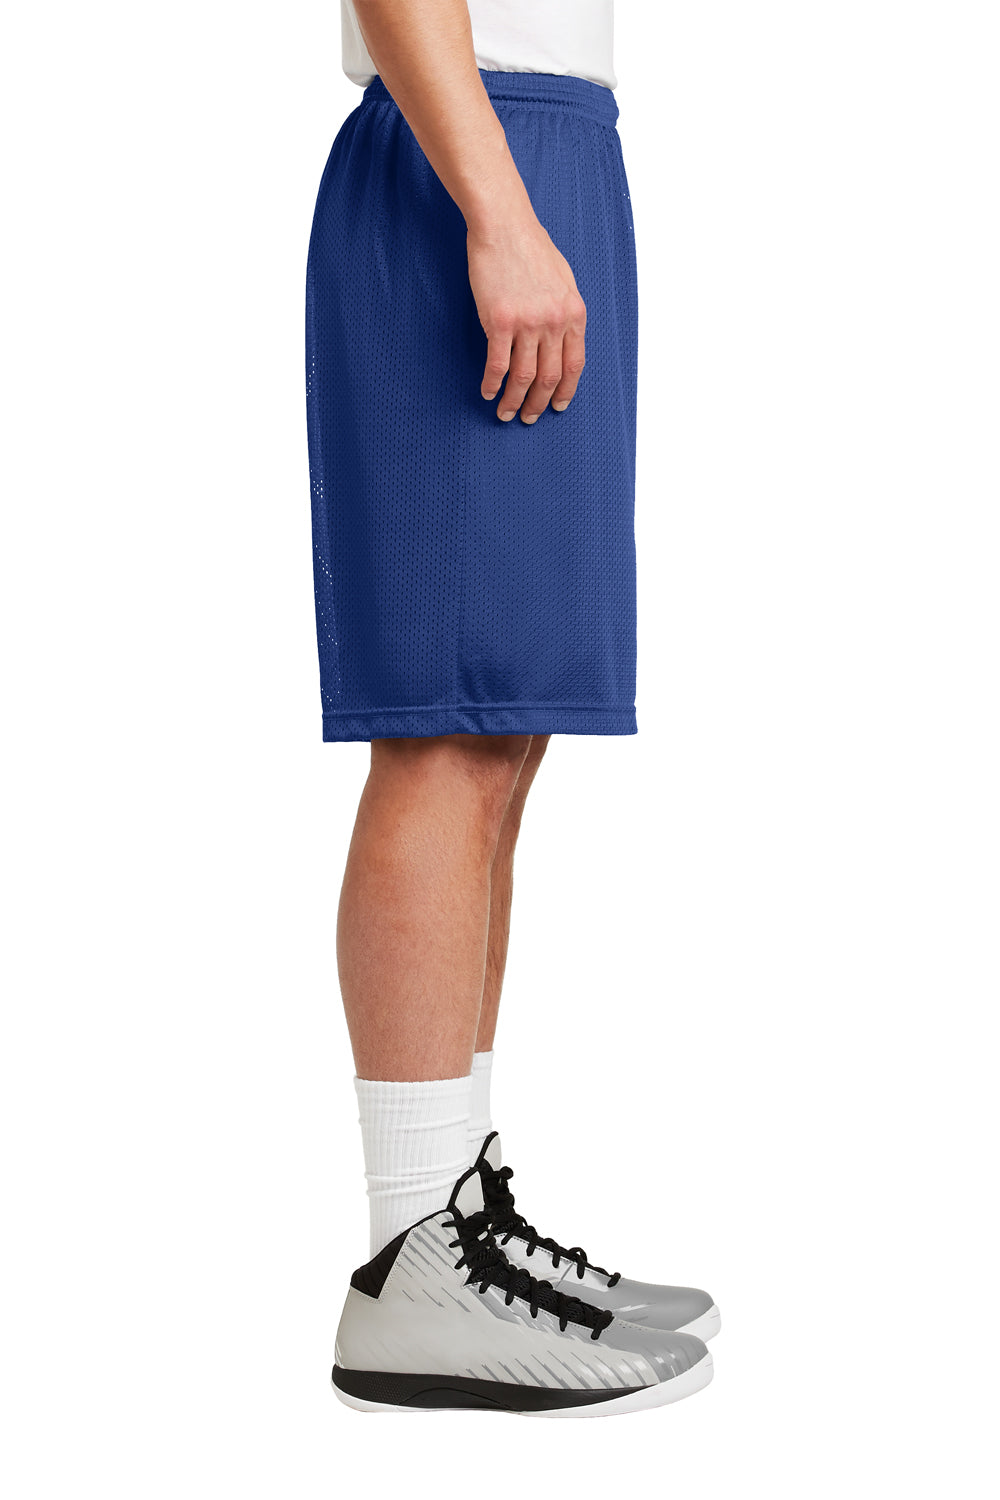 Sport-Tek ST515 PosiCharge Classic Mesh Long Shorts True Royal Blue Side